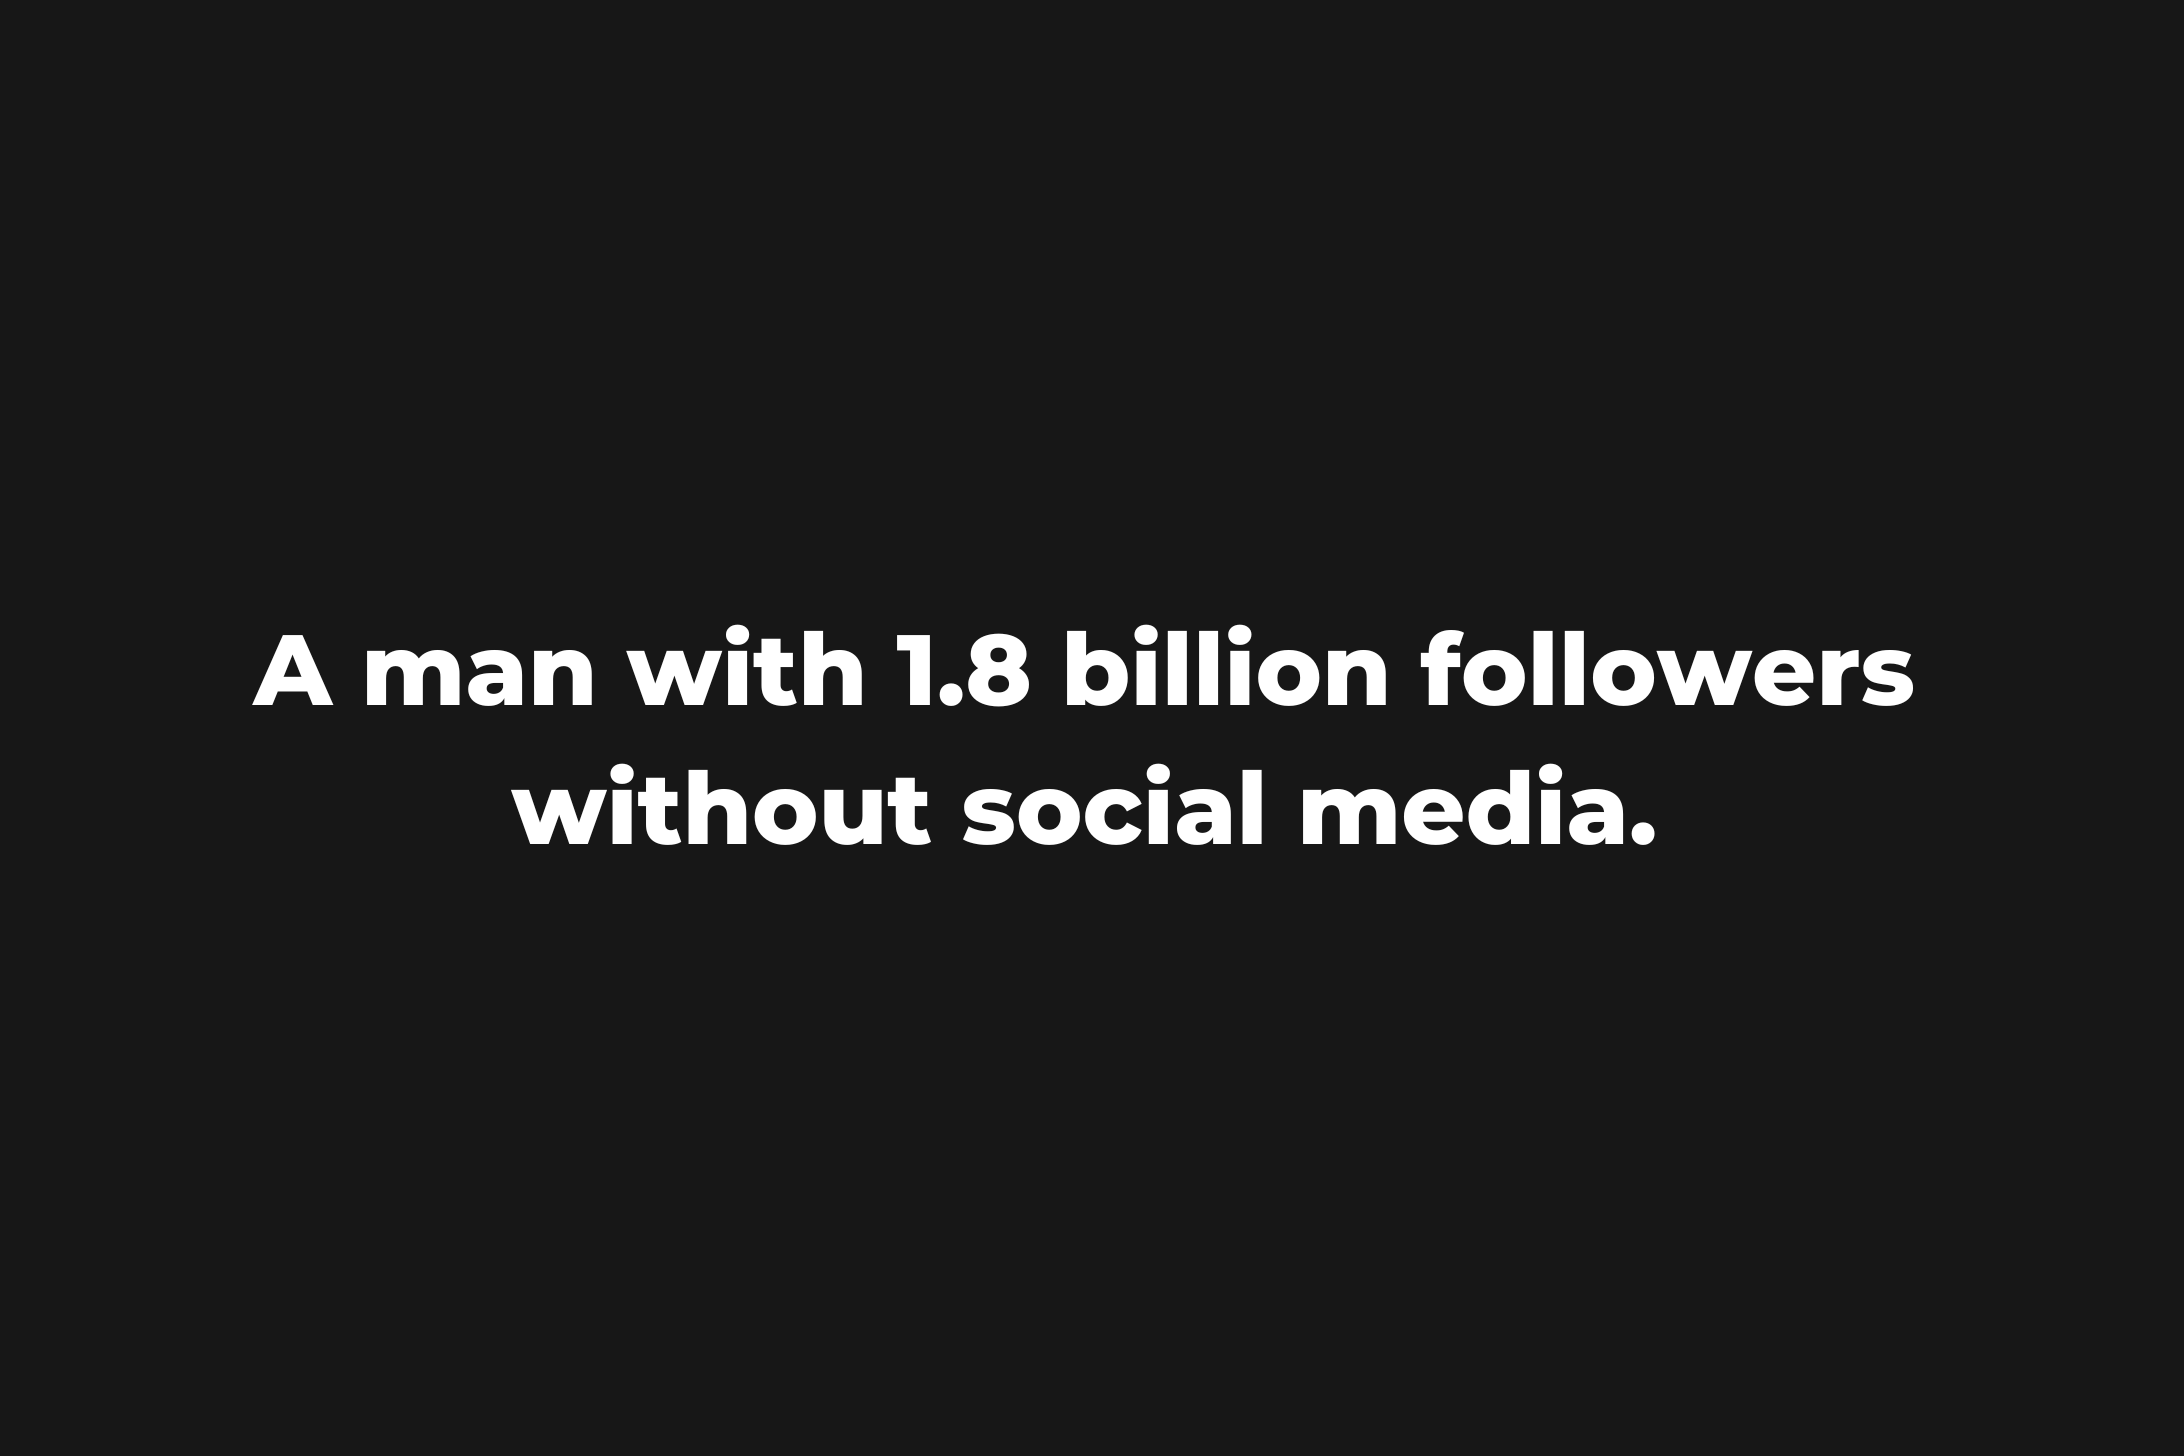 A man with 1.8 billion followers